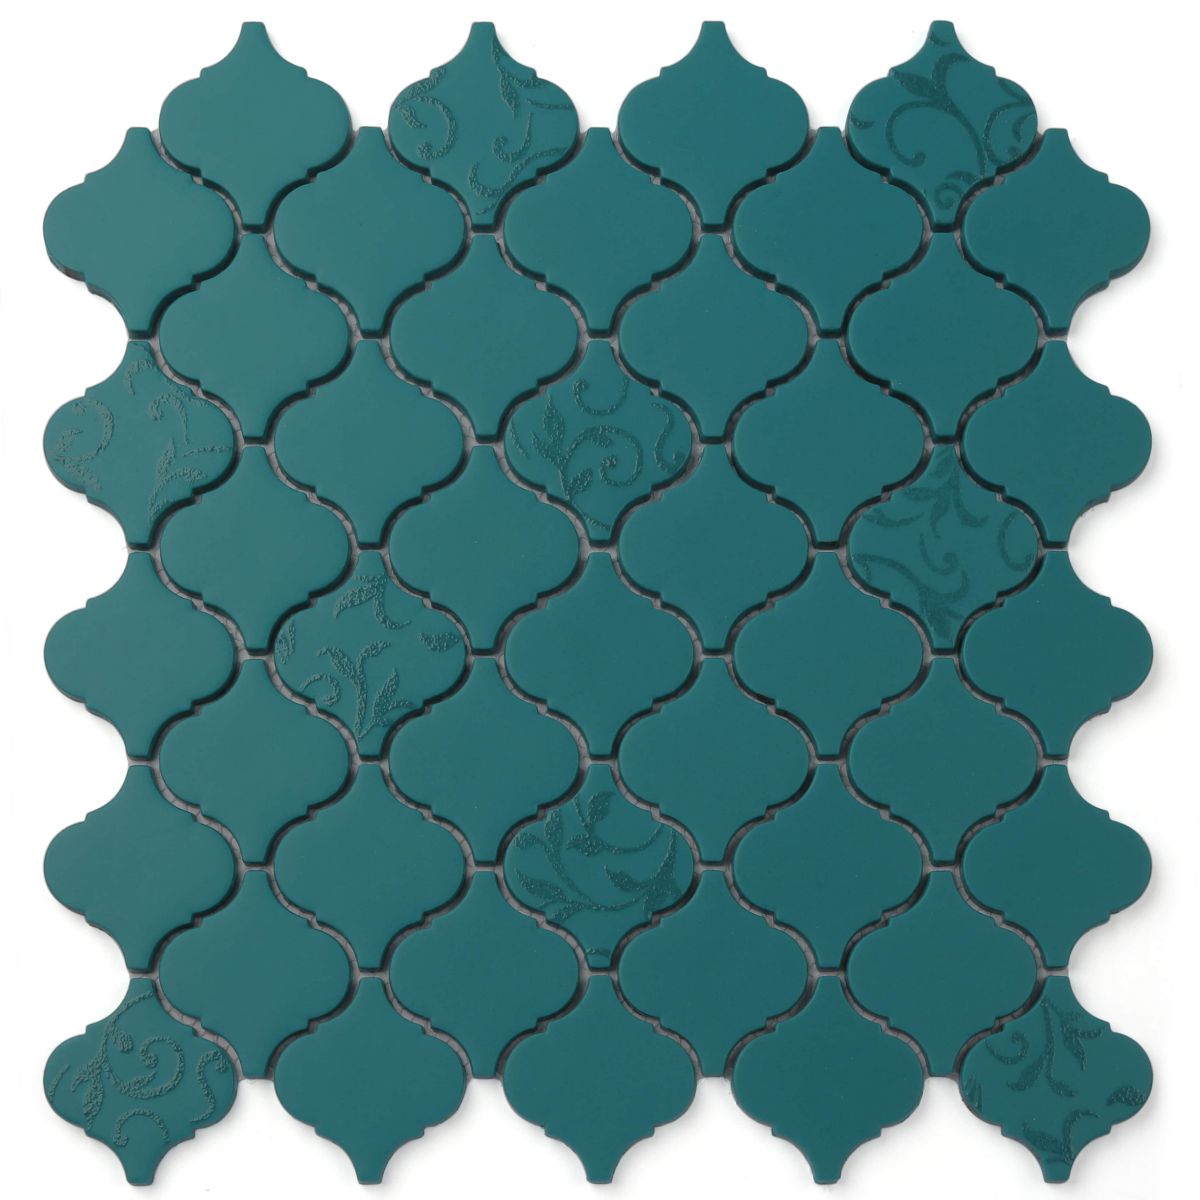 ENAMEL GLASS MOSAIC - Raised Pattern Mix - Turquoise